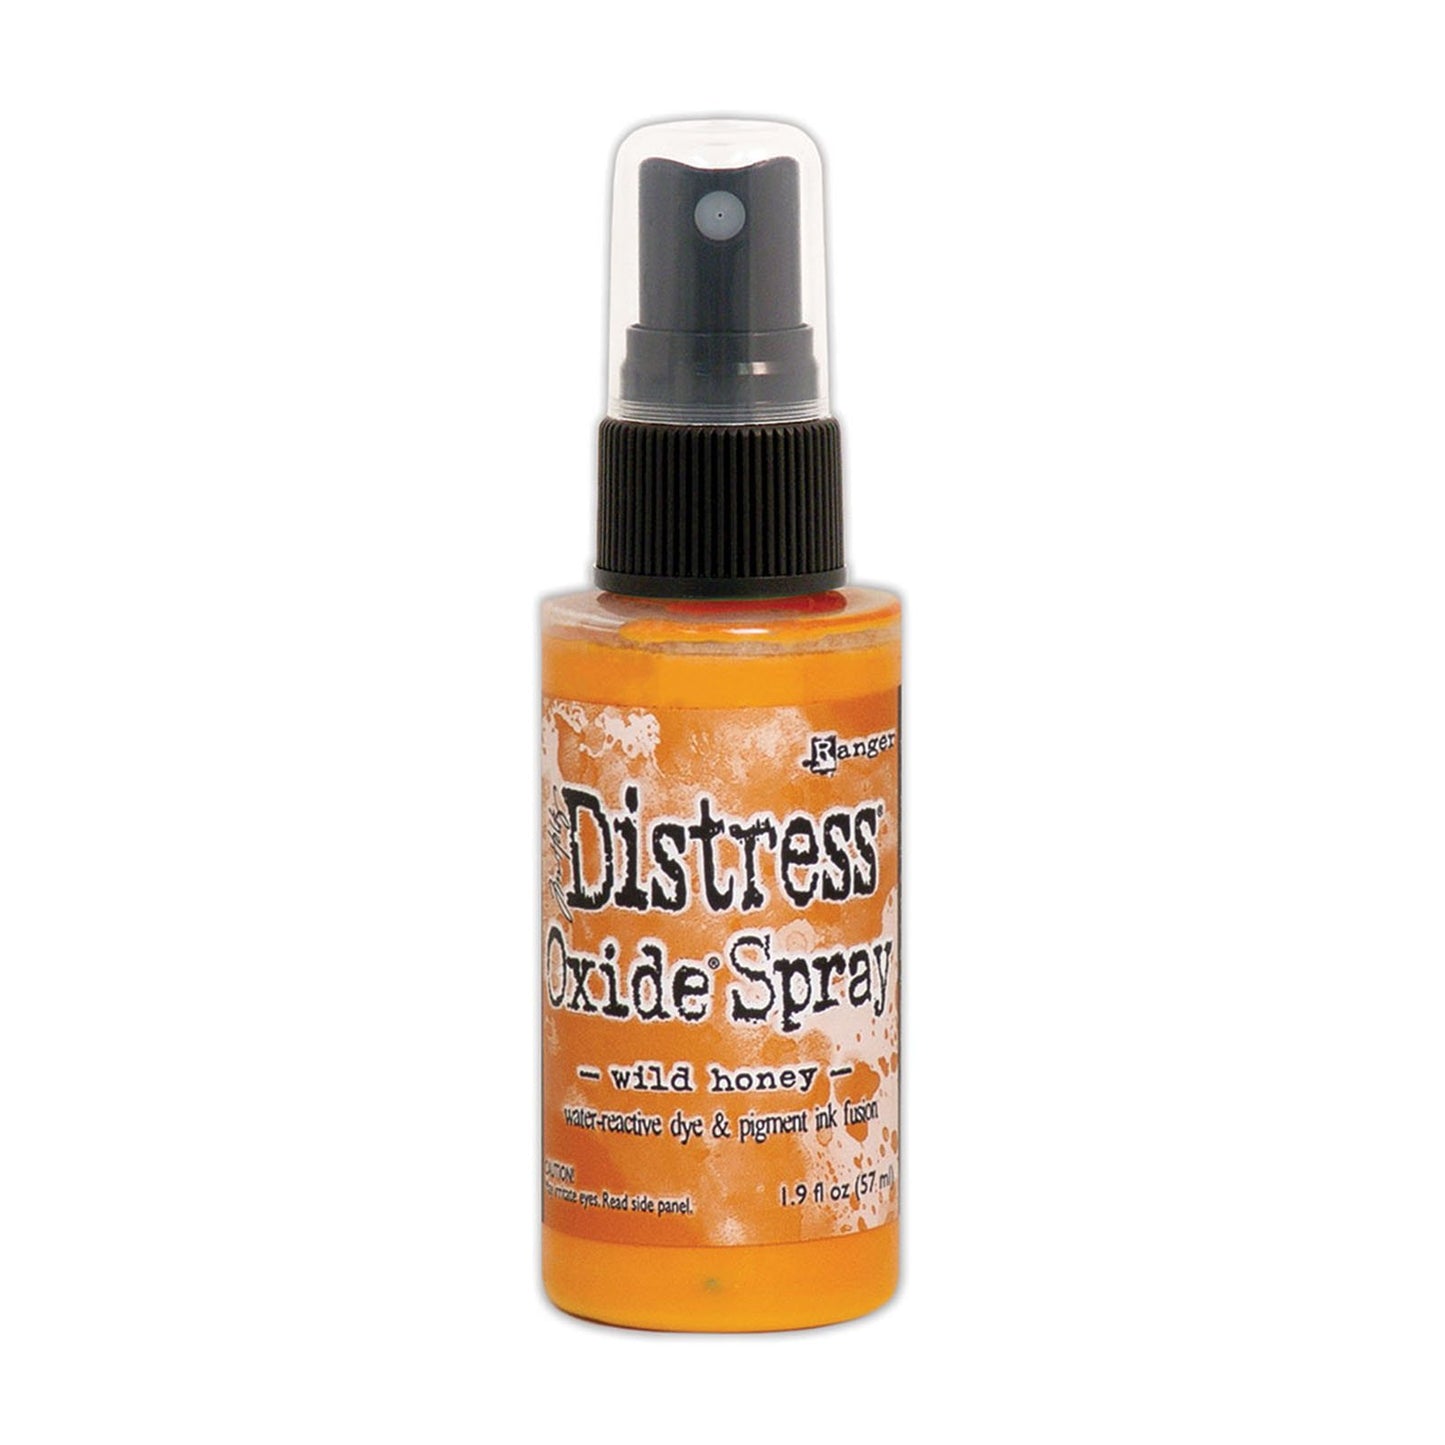 Distress Oxide Spray Wild honey